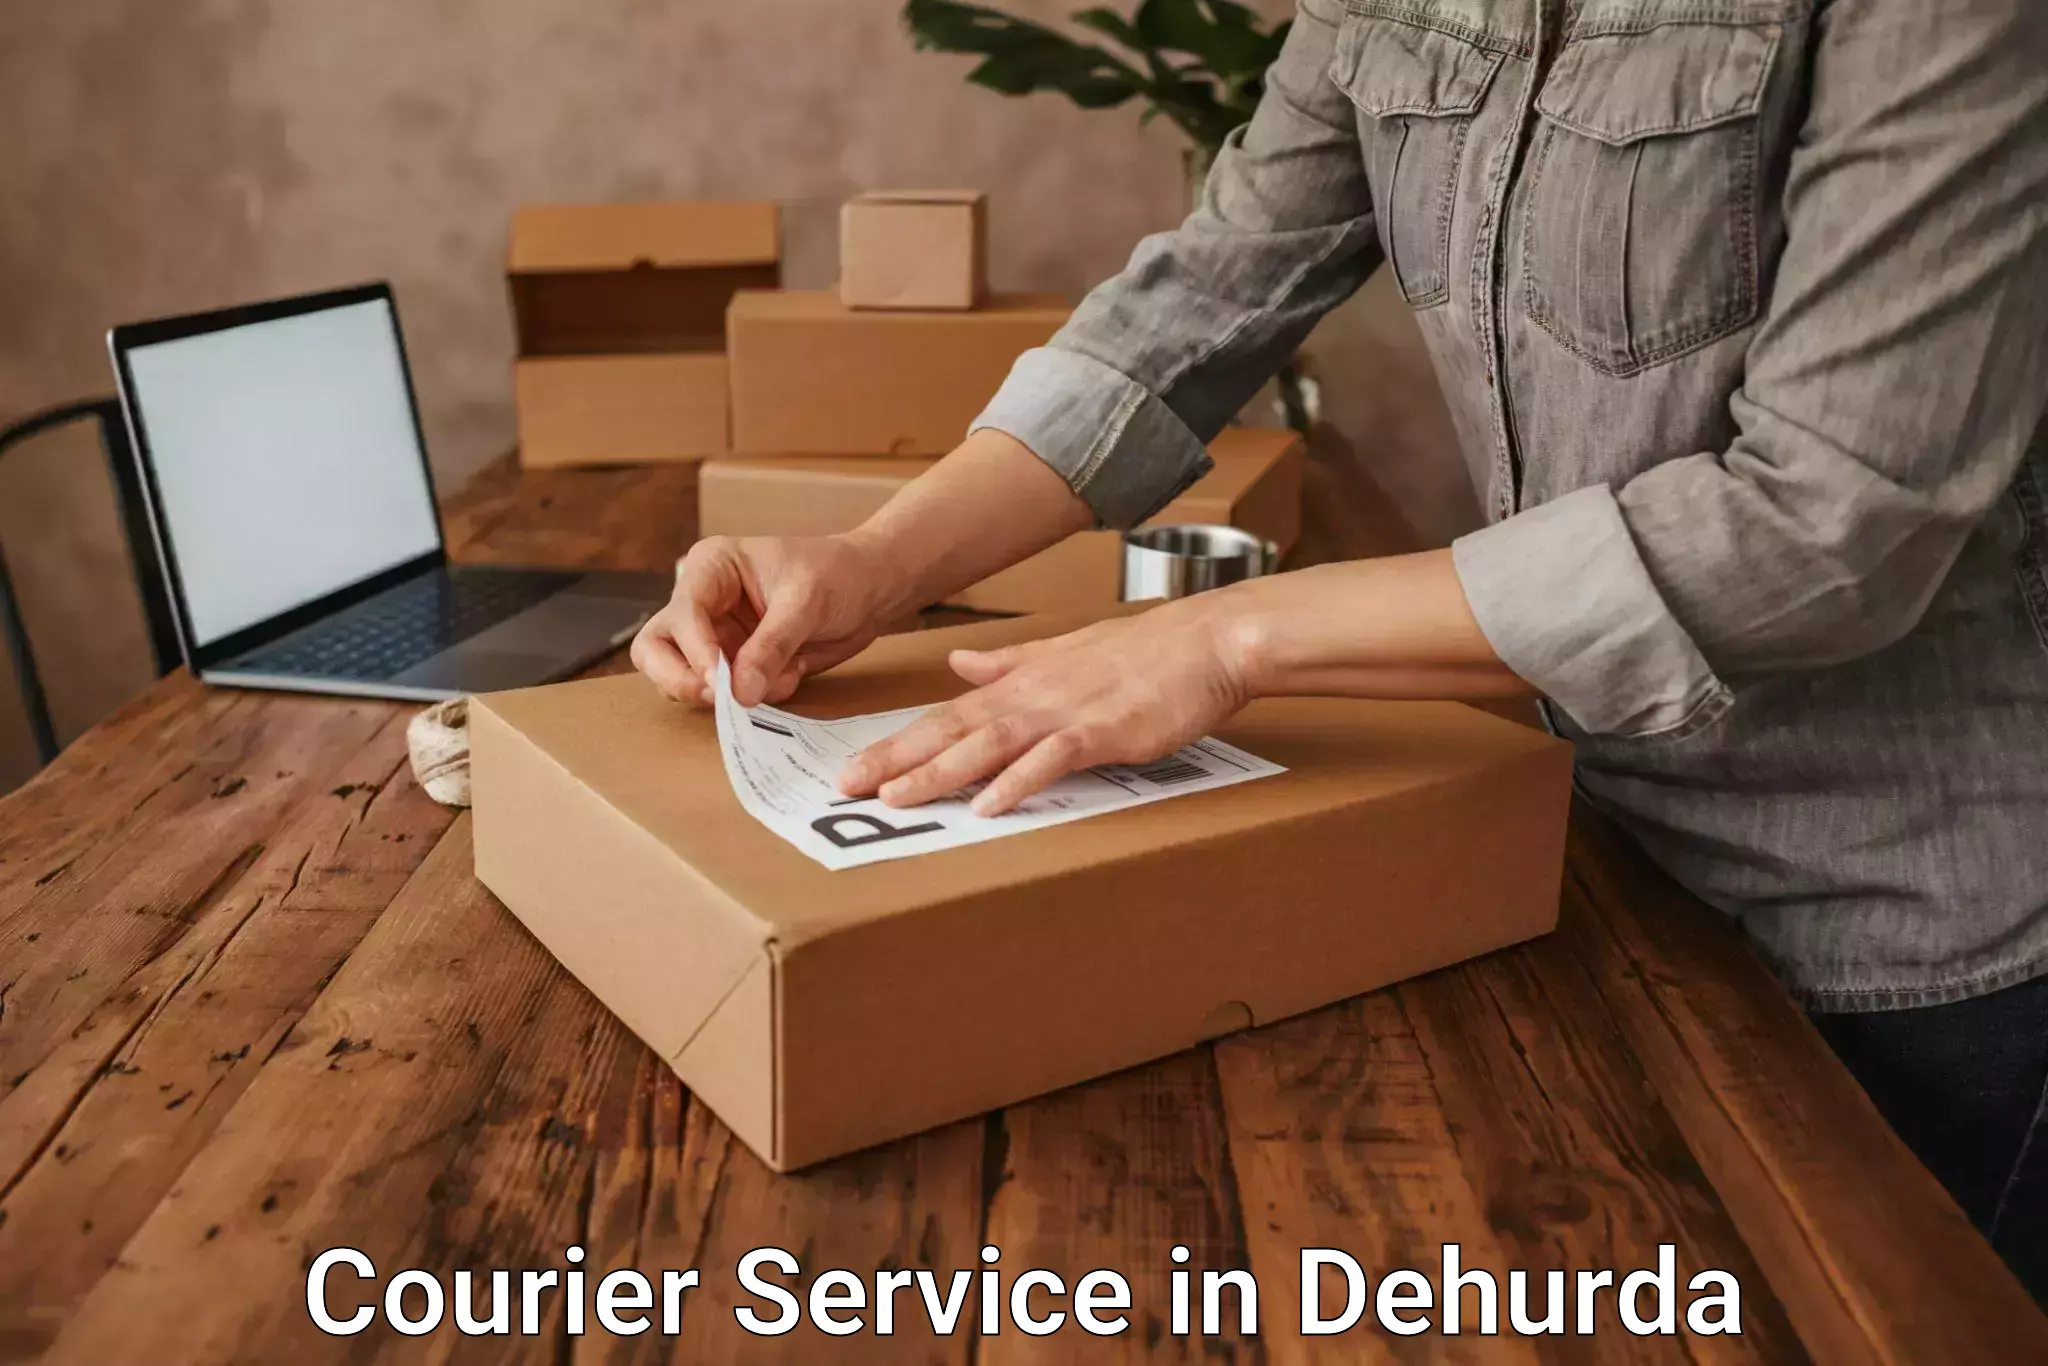 Premium delivery services in Dehurda